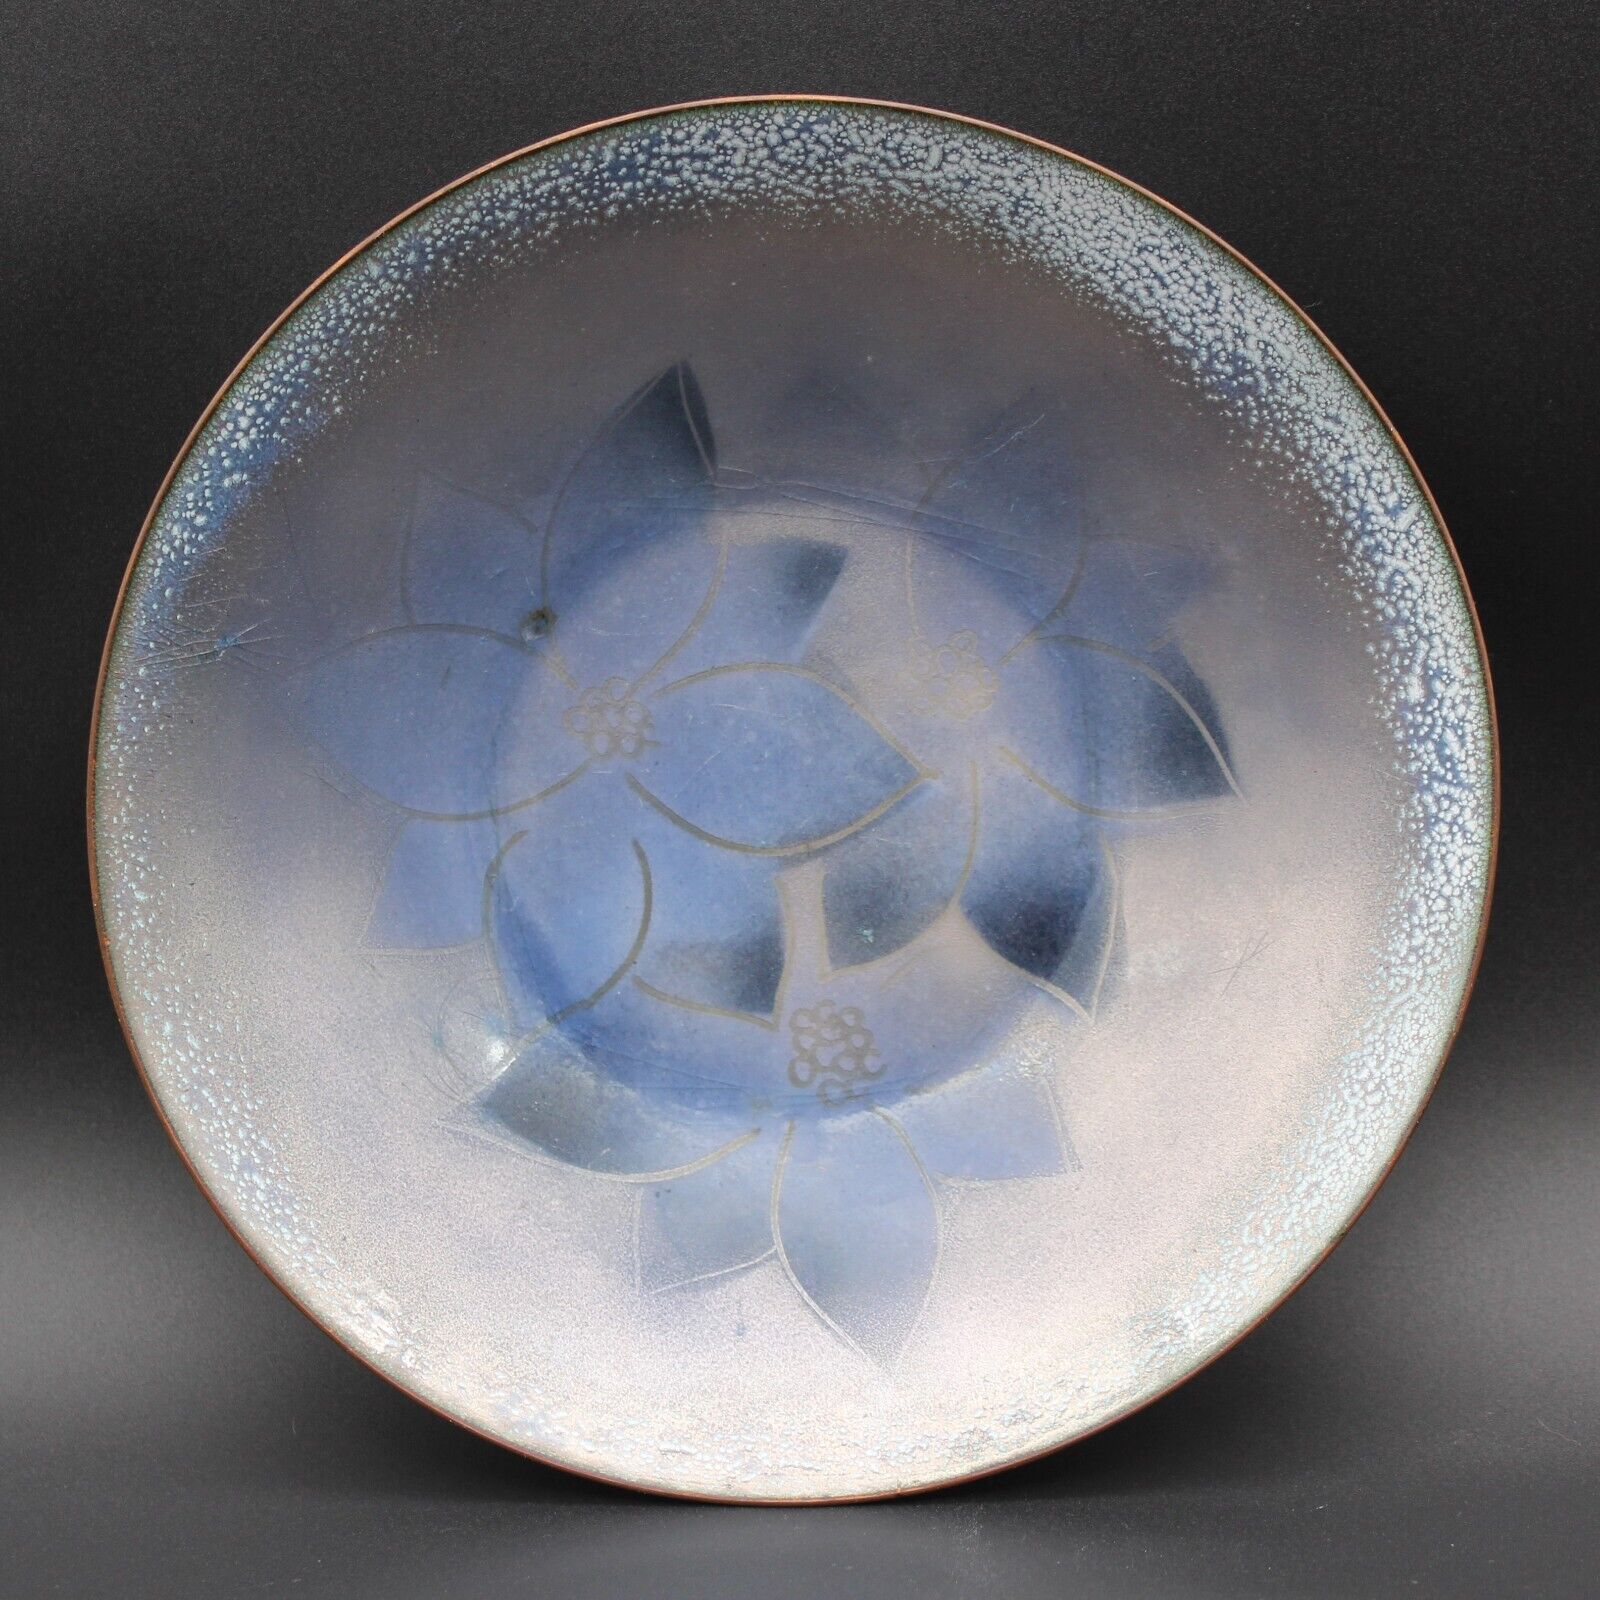 Vtg Edward Winter Enamel on Copper Bowl or Dish Flowers Mid Century Modern Art